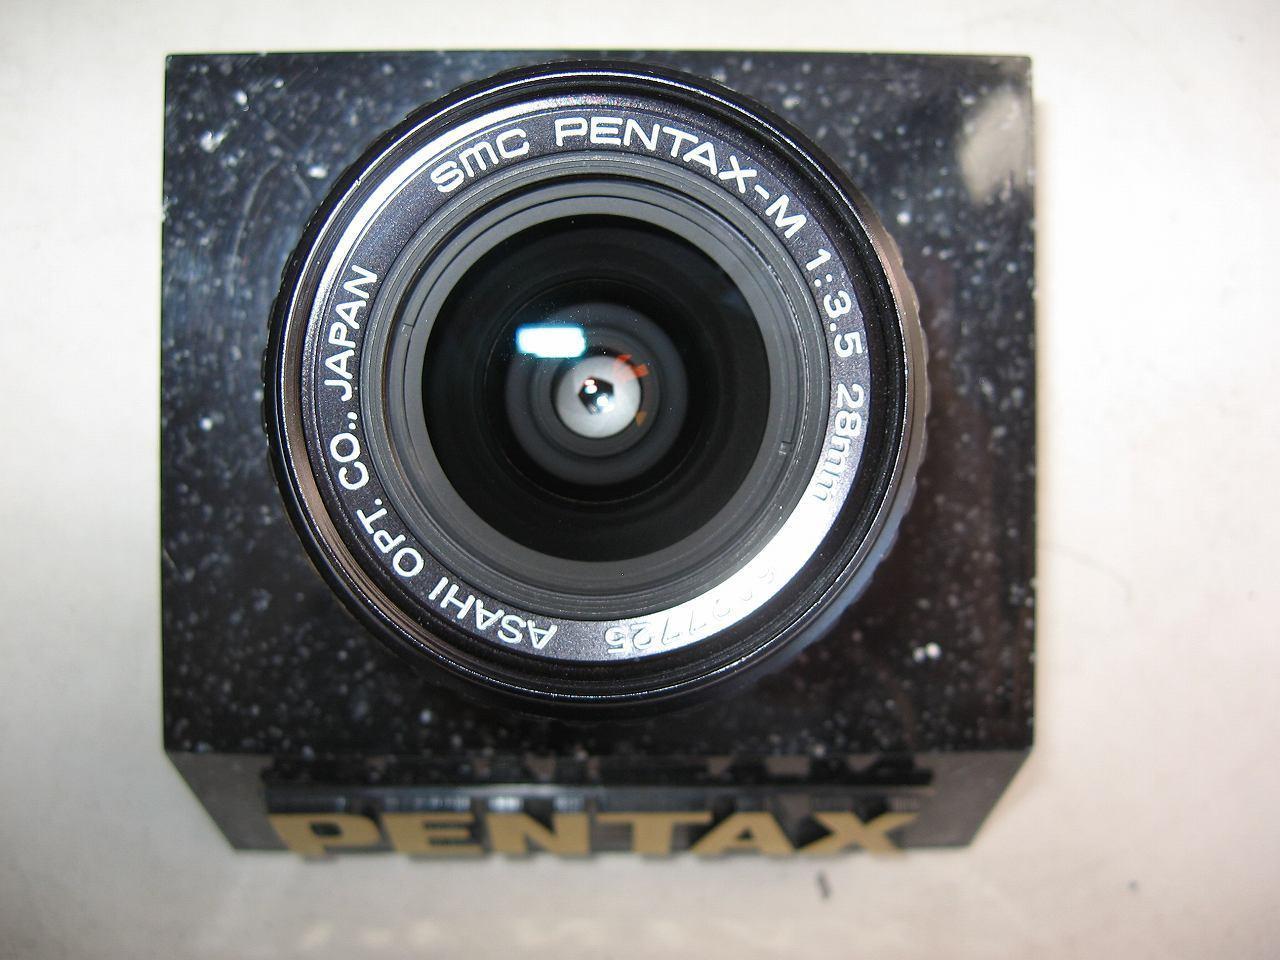 SMC PENTAX-M 28mm F3.5 カビ曇りなし#210